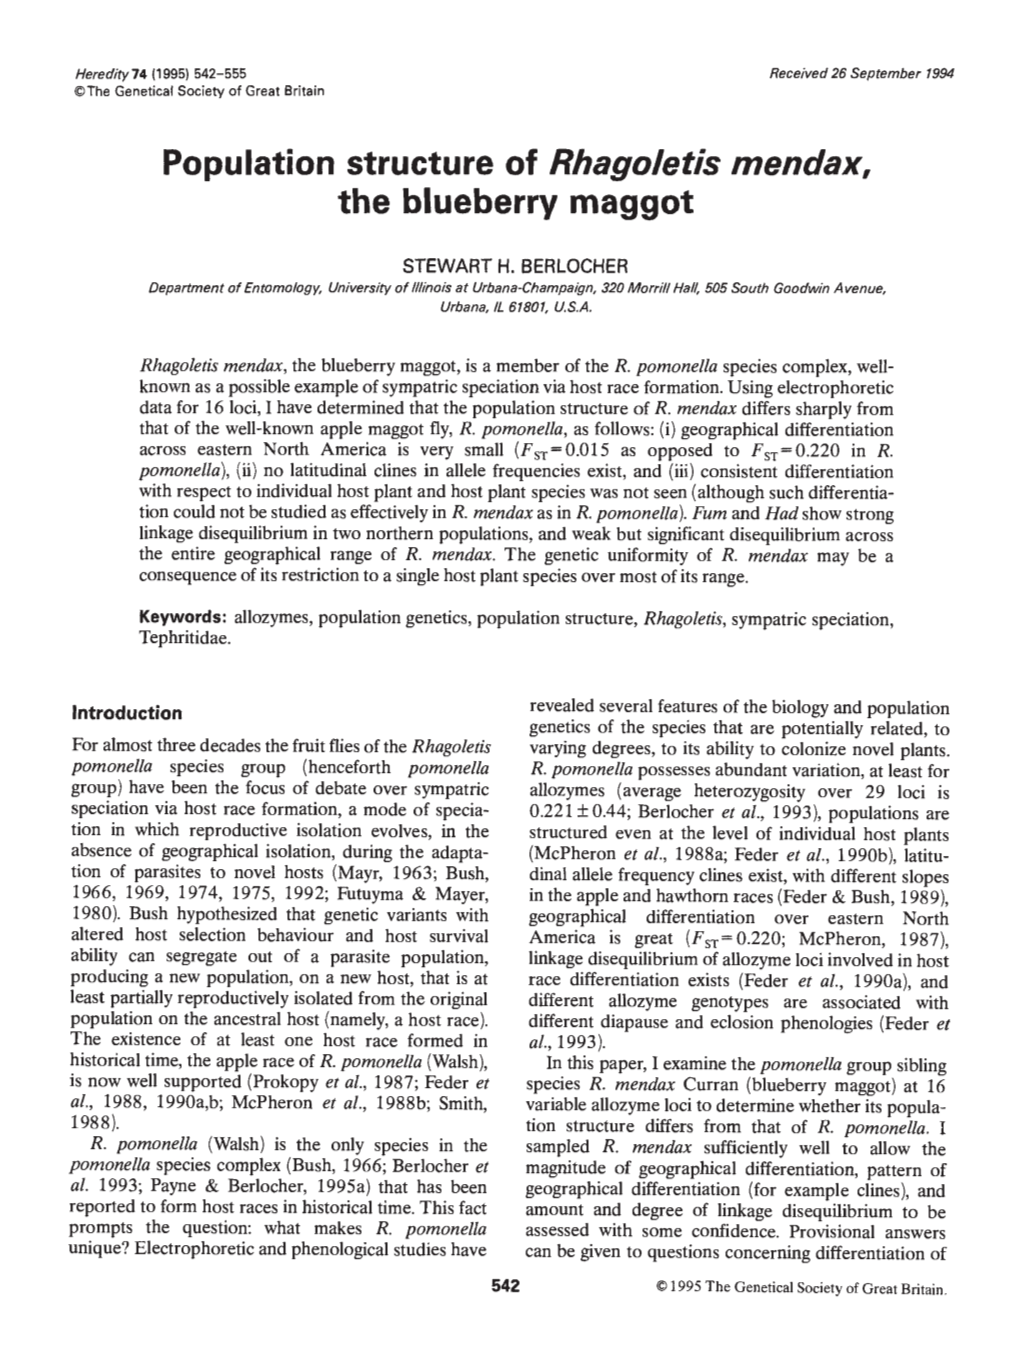 The Blueberry Maggot